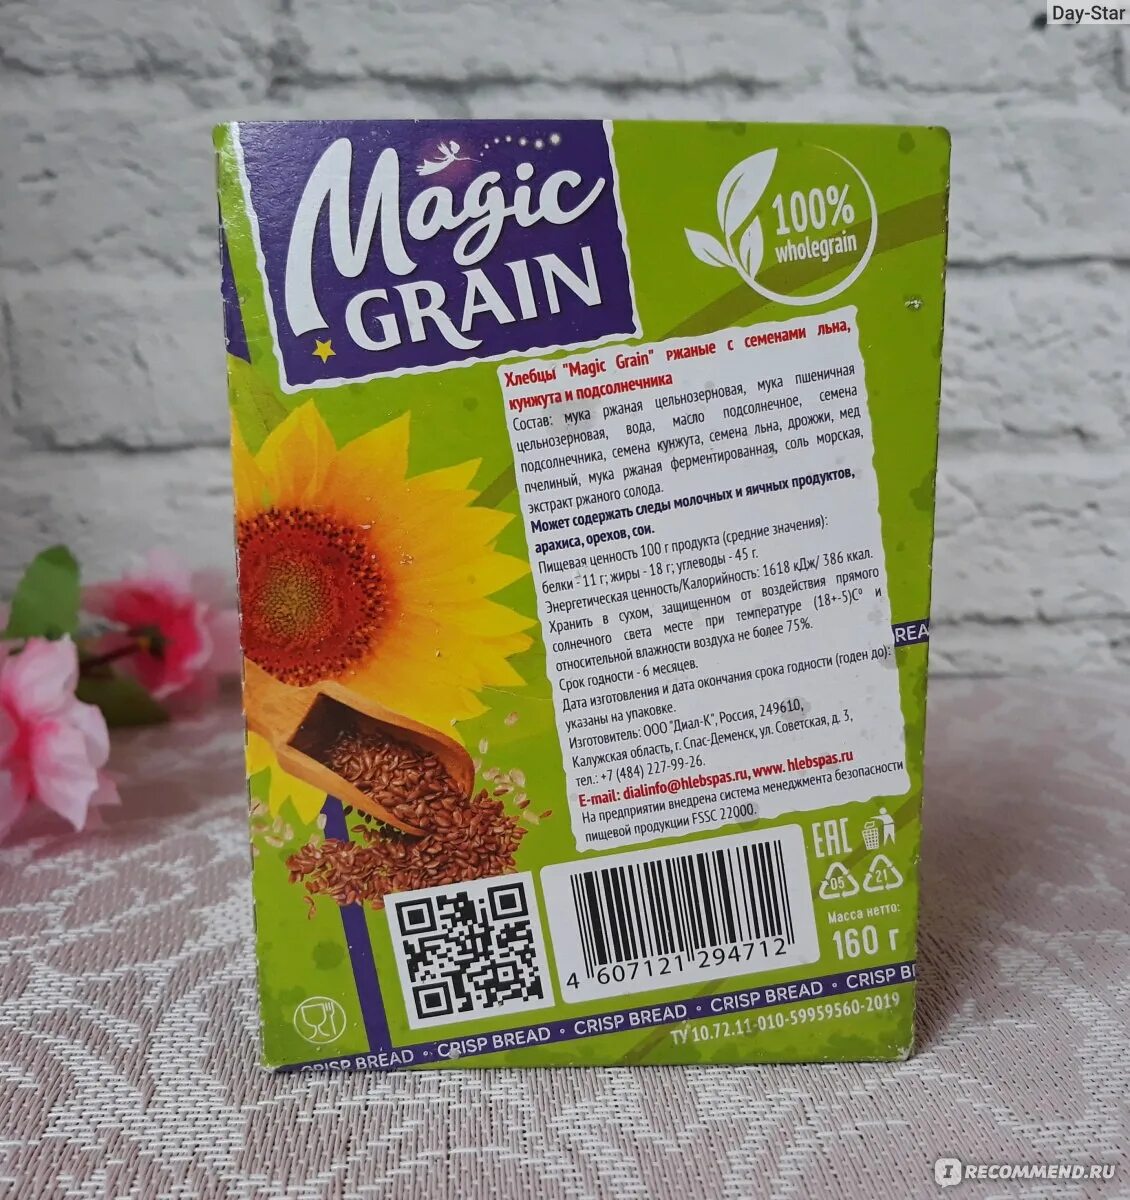 Magic grain. Хлебцы Magic Grain ржаные. Хлебцы ржаные Magic Grain с семенами. Magic Grain хлебцы ржаные с семенами льна. Хлебцы Magic Grain калорийность.